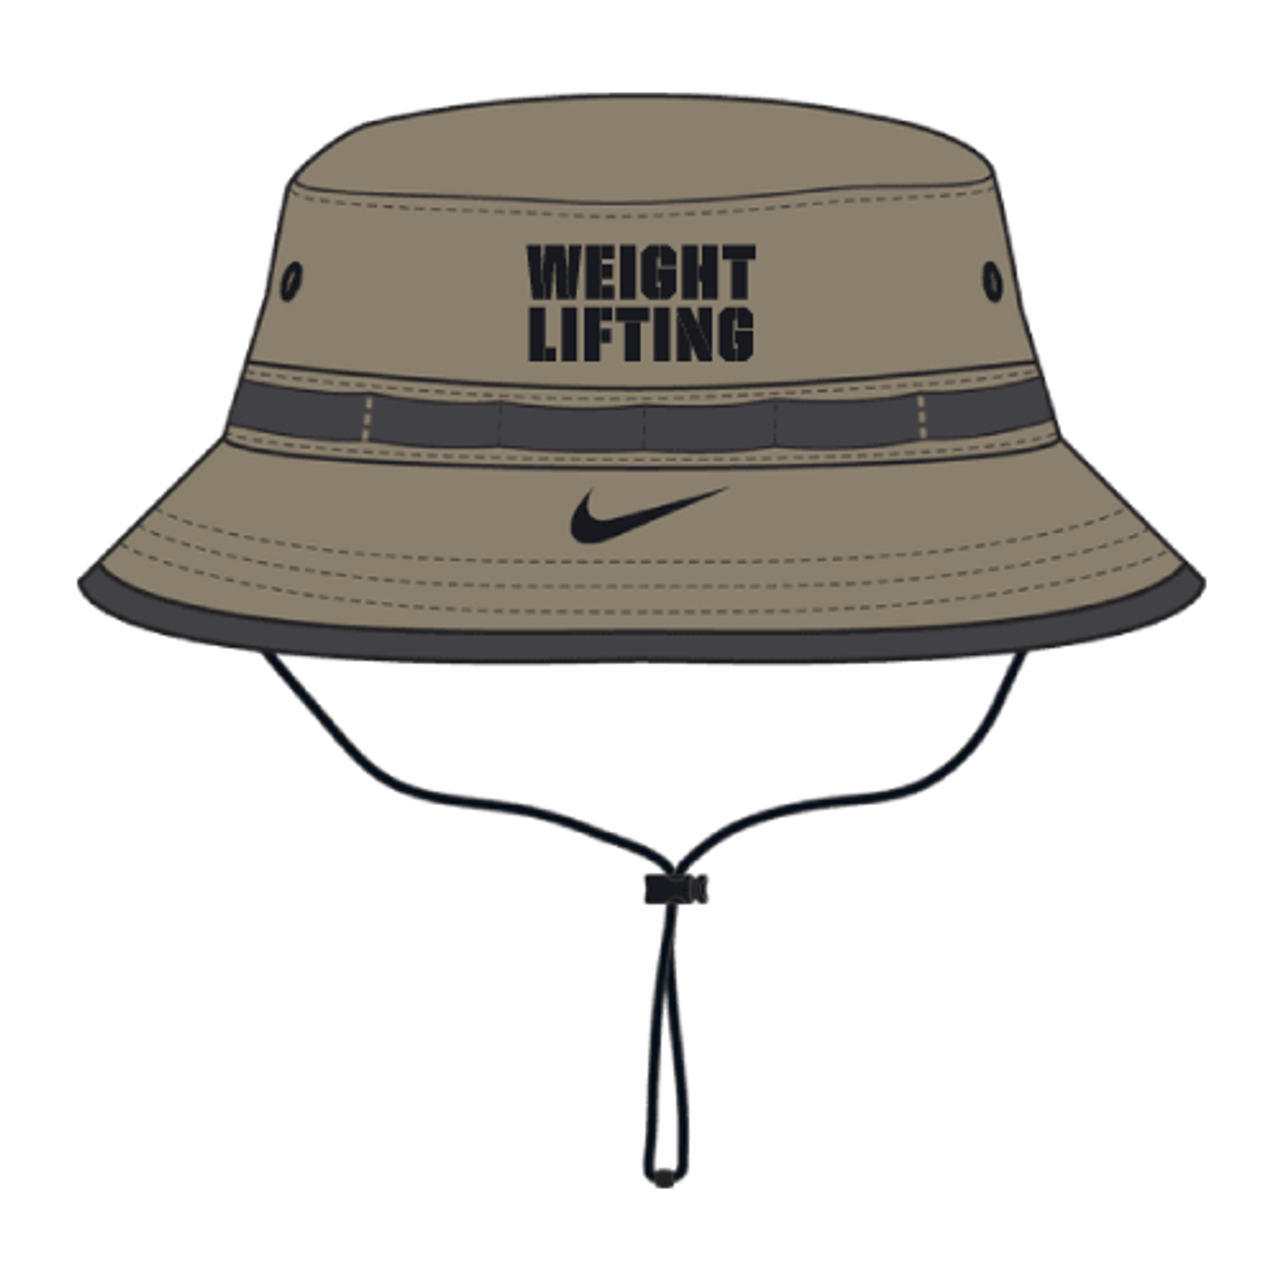 Nike Weightlifting Dri-Fit Bucket Hat - Khaki/Black